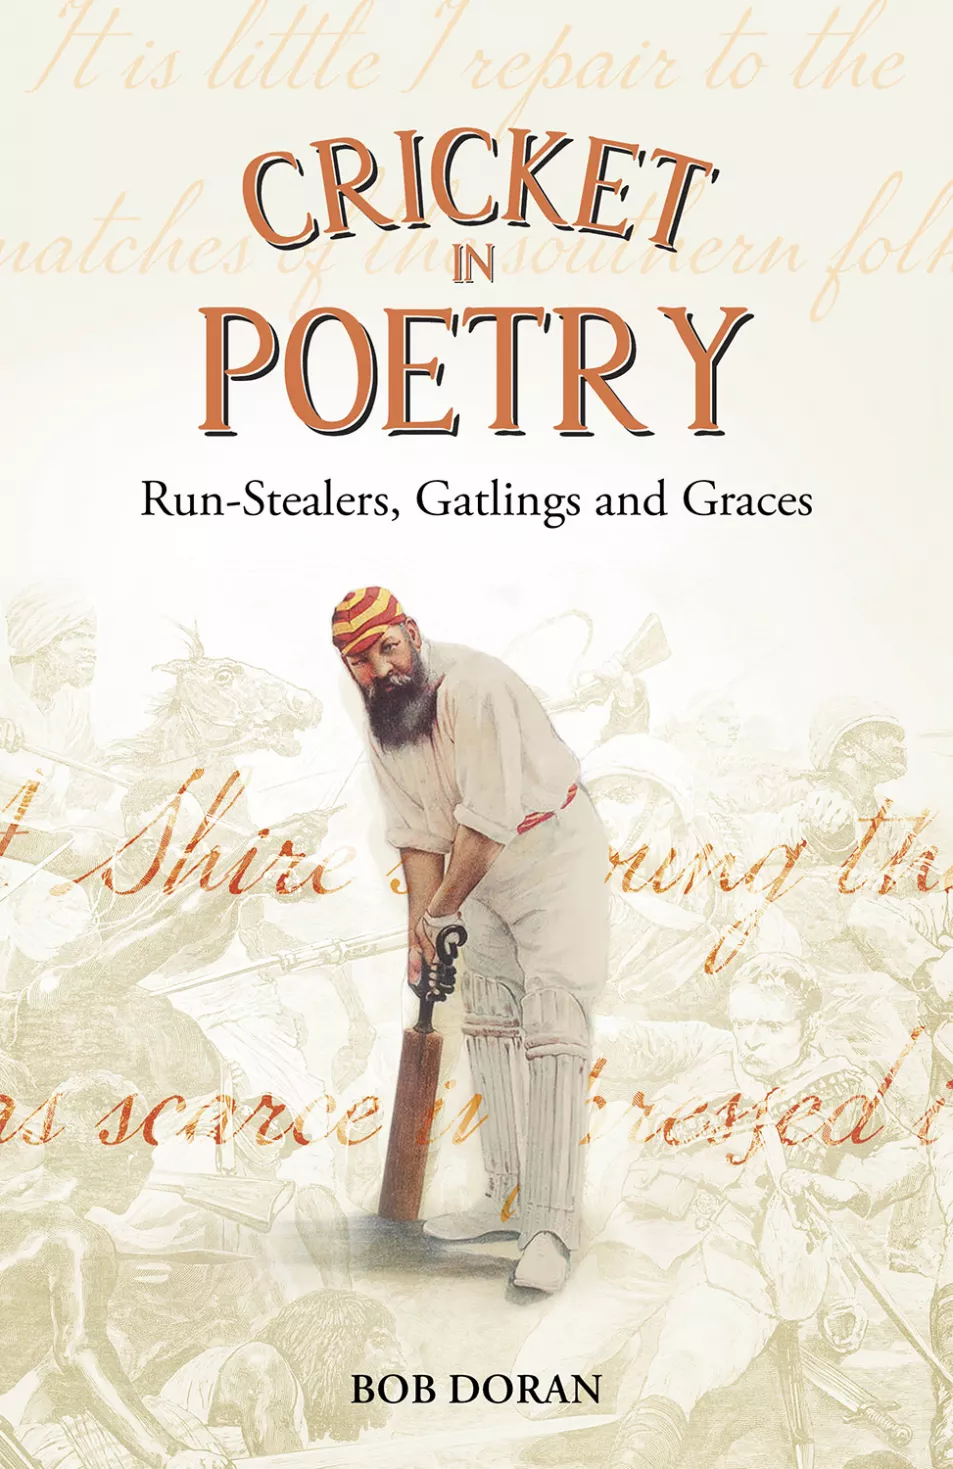 Cricket In Poetry: Run-Stealers, Gatlings And Graces by Bob Doran